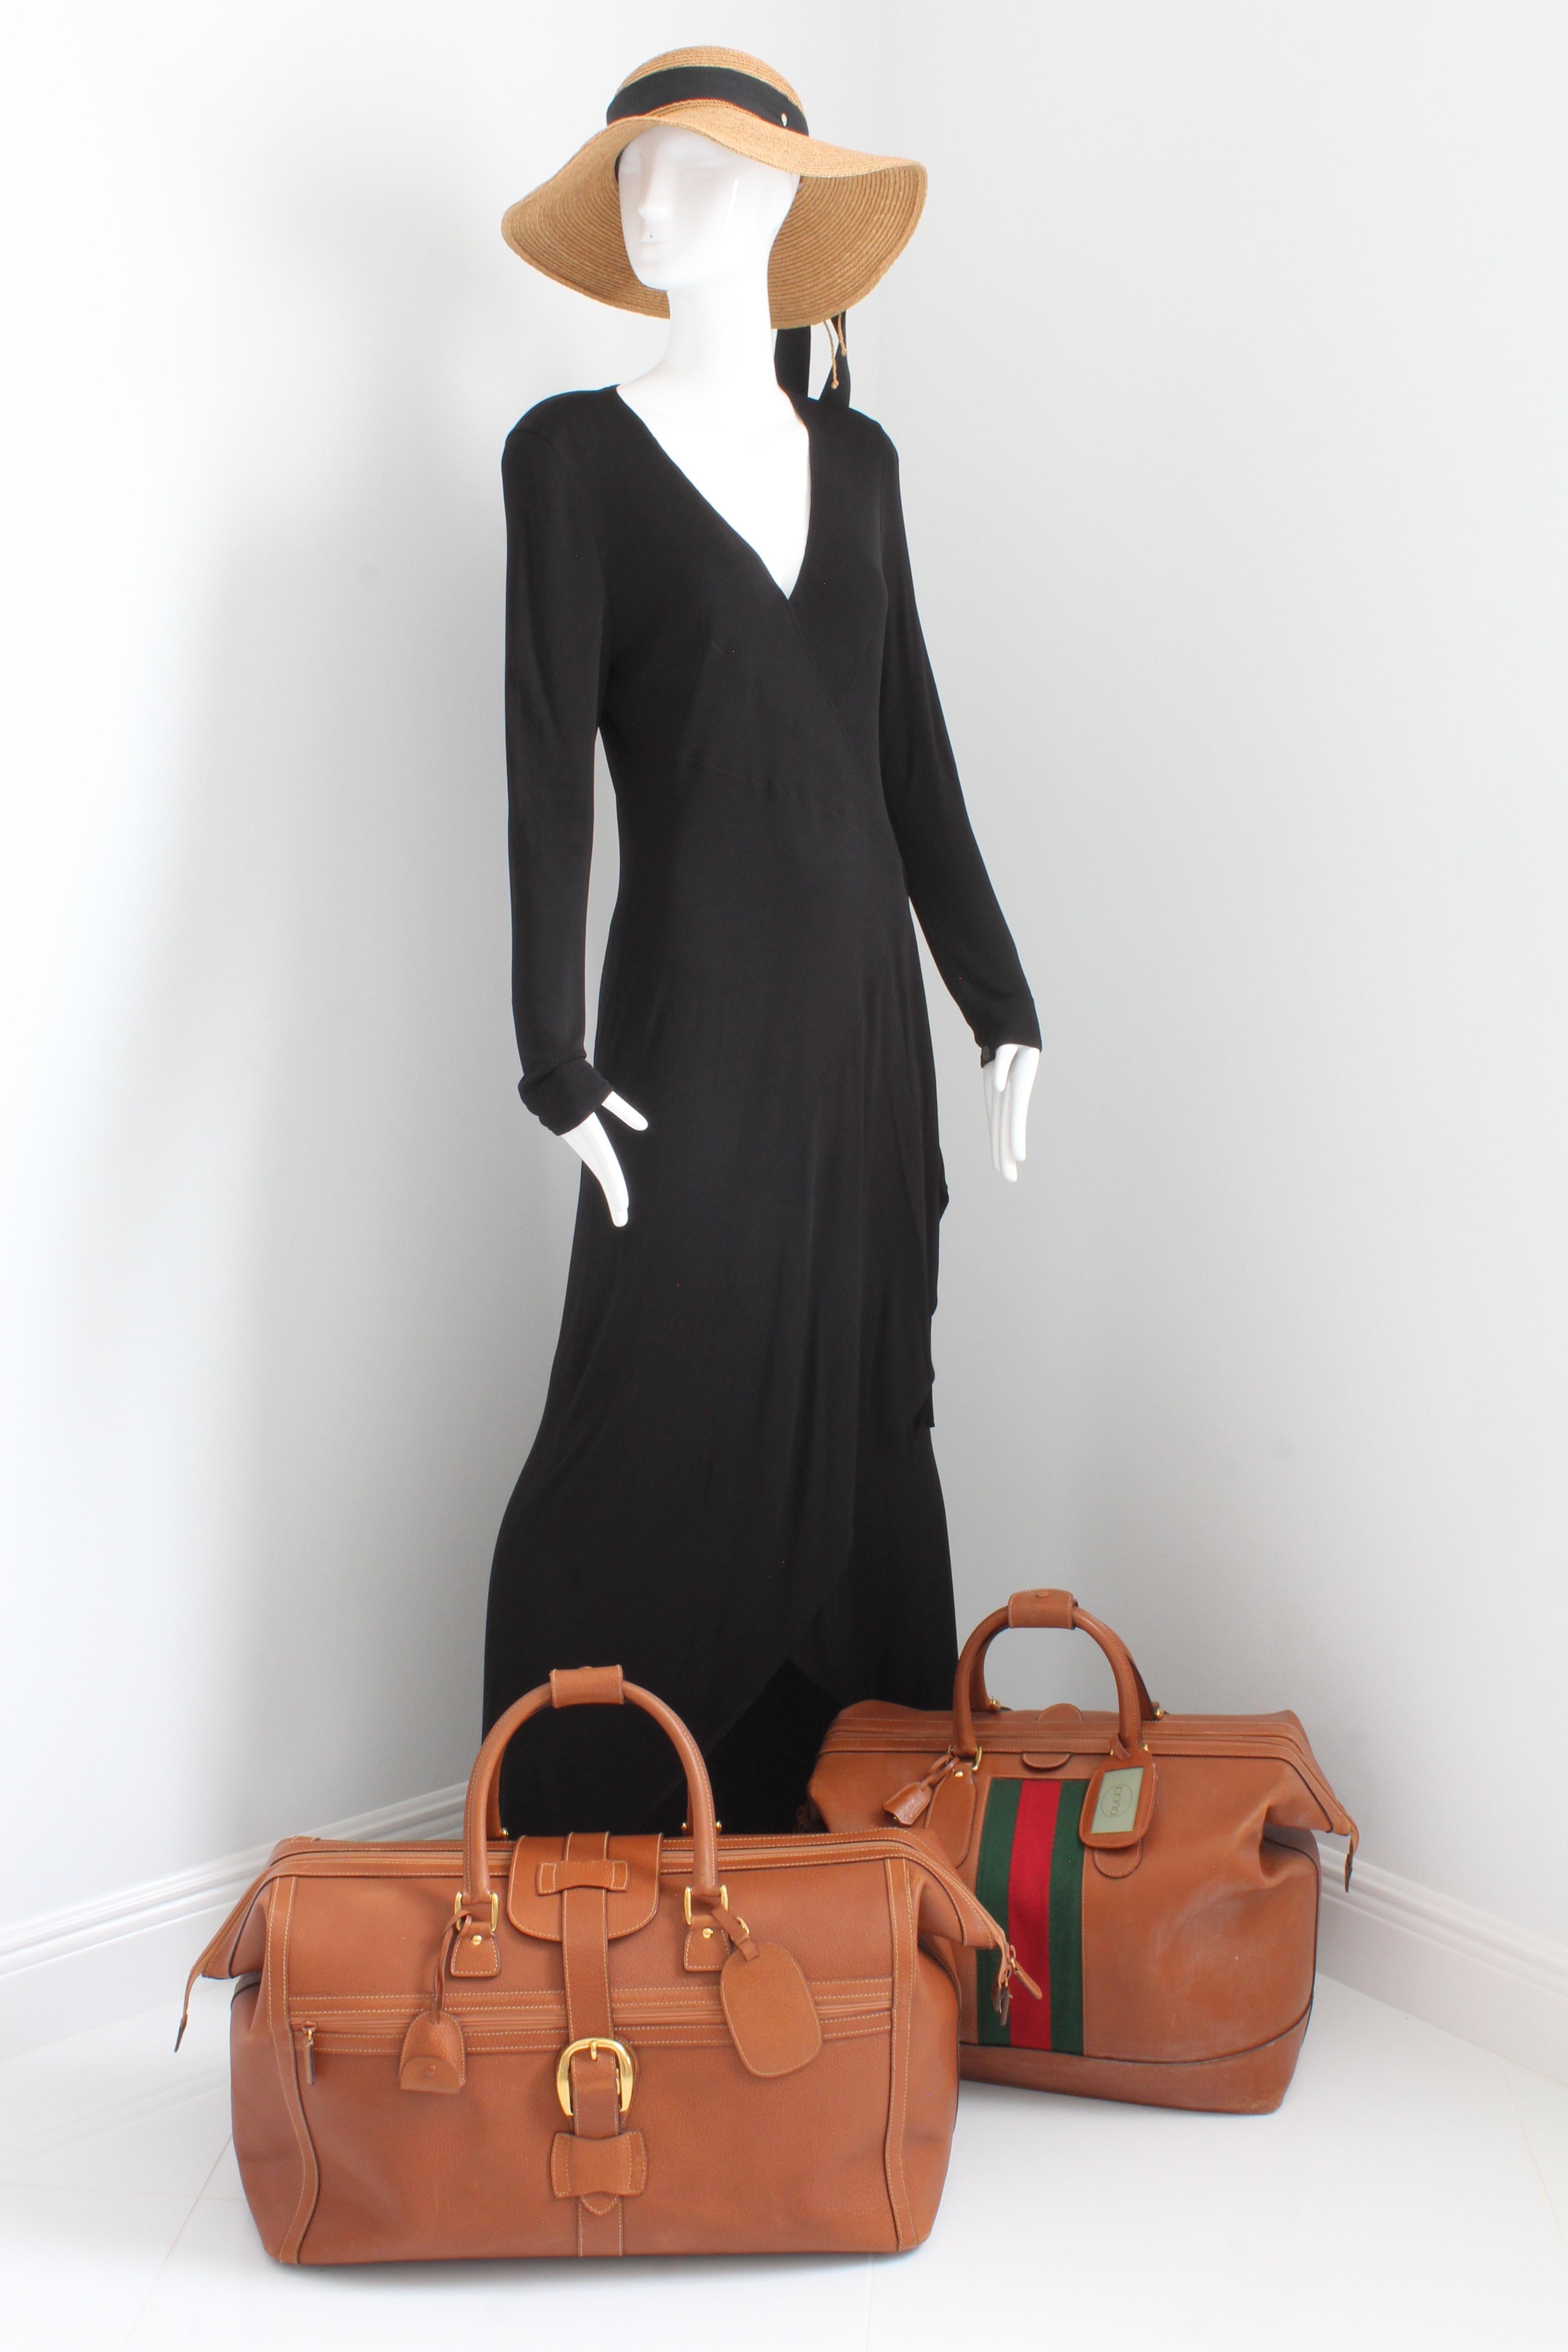 Gucci Large Duffel Travel Bag Pigskin Leather Luggage Rare 65cm  3